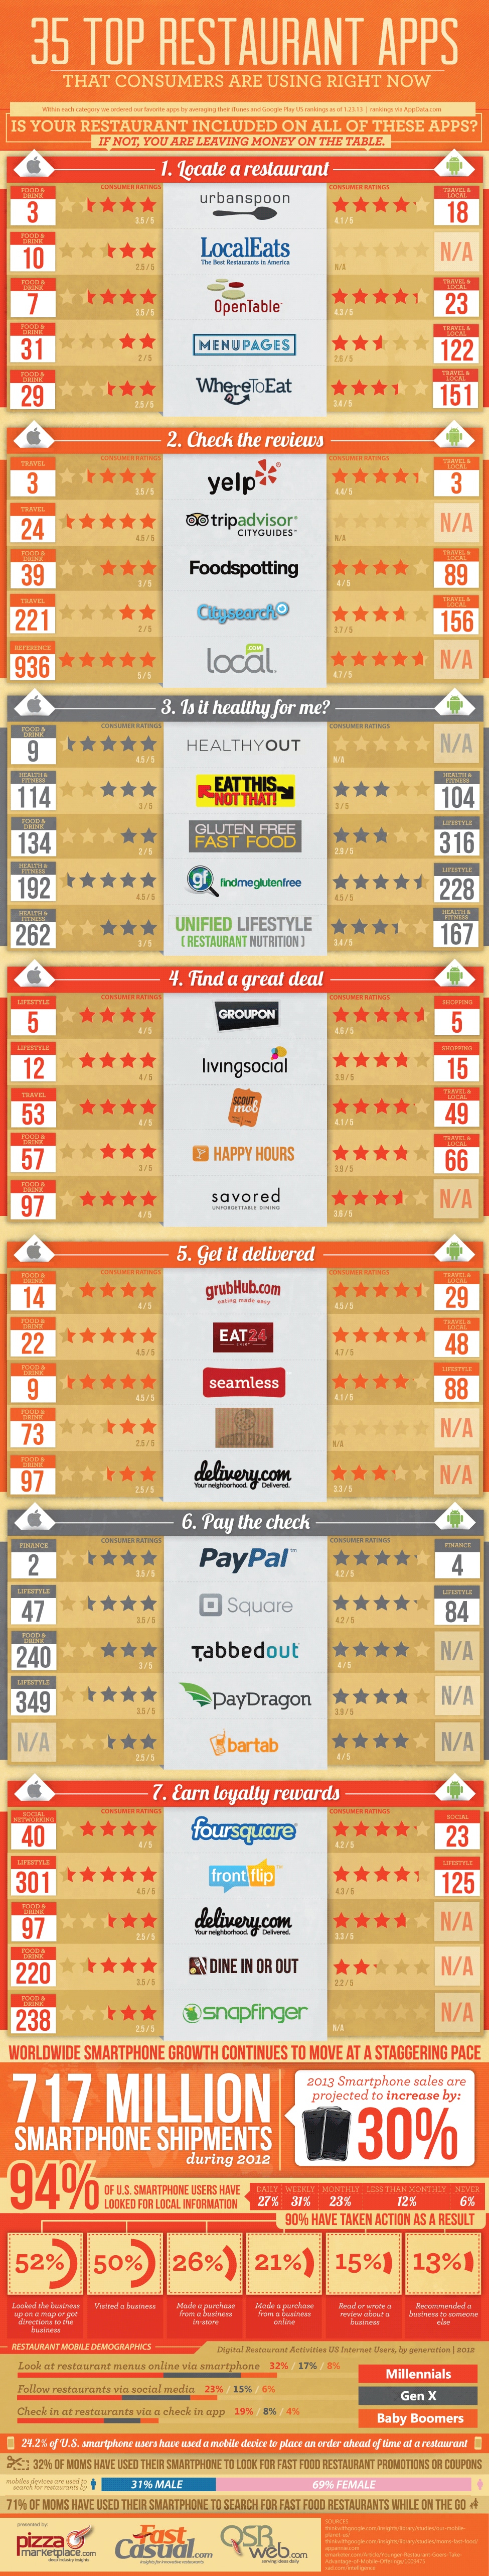 35-best-restaurant-apps-infographic